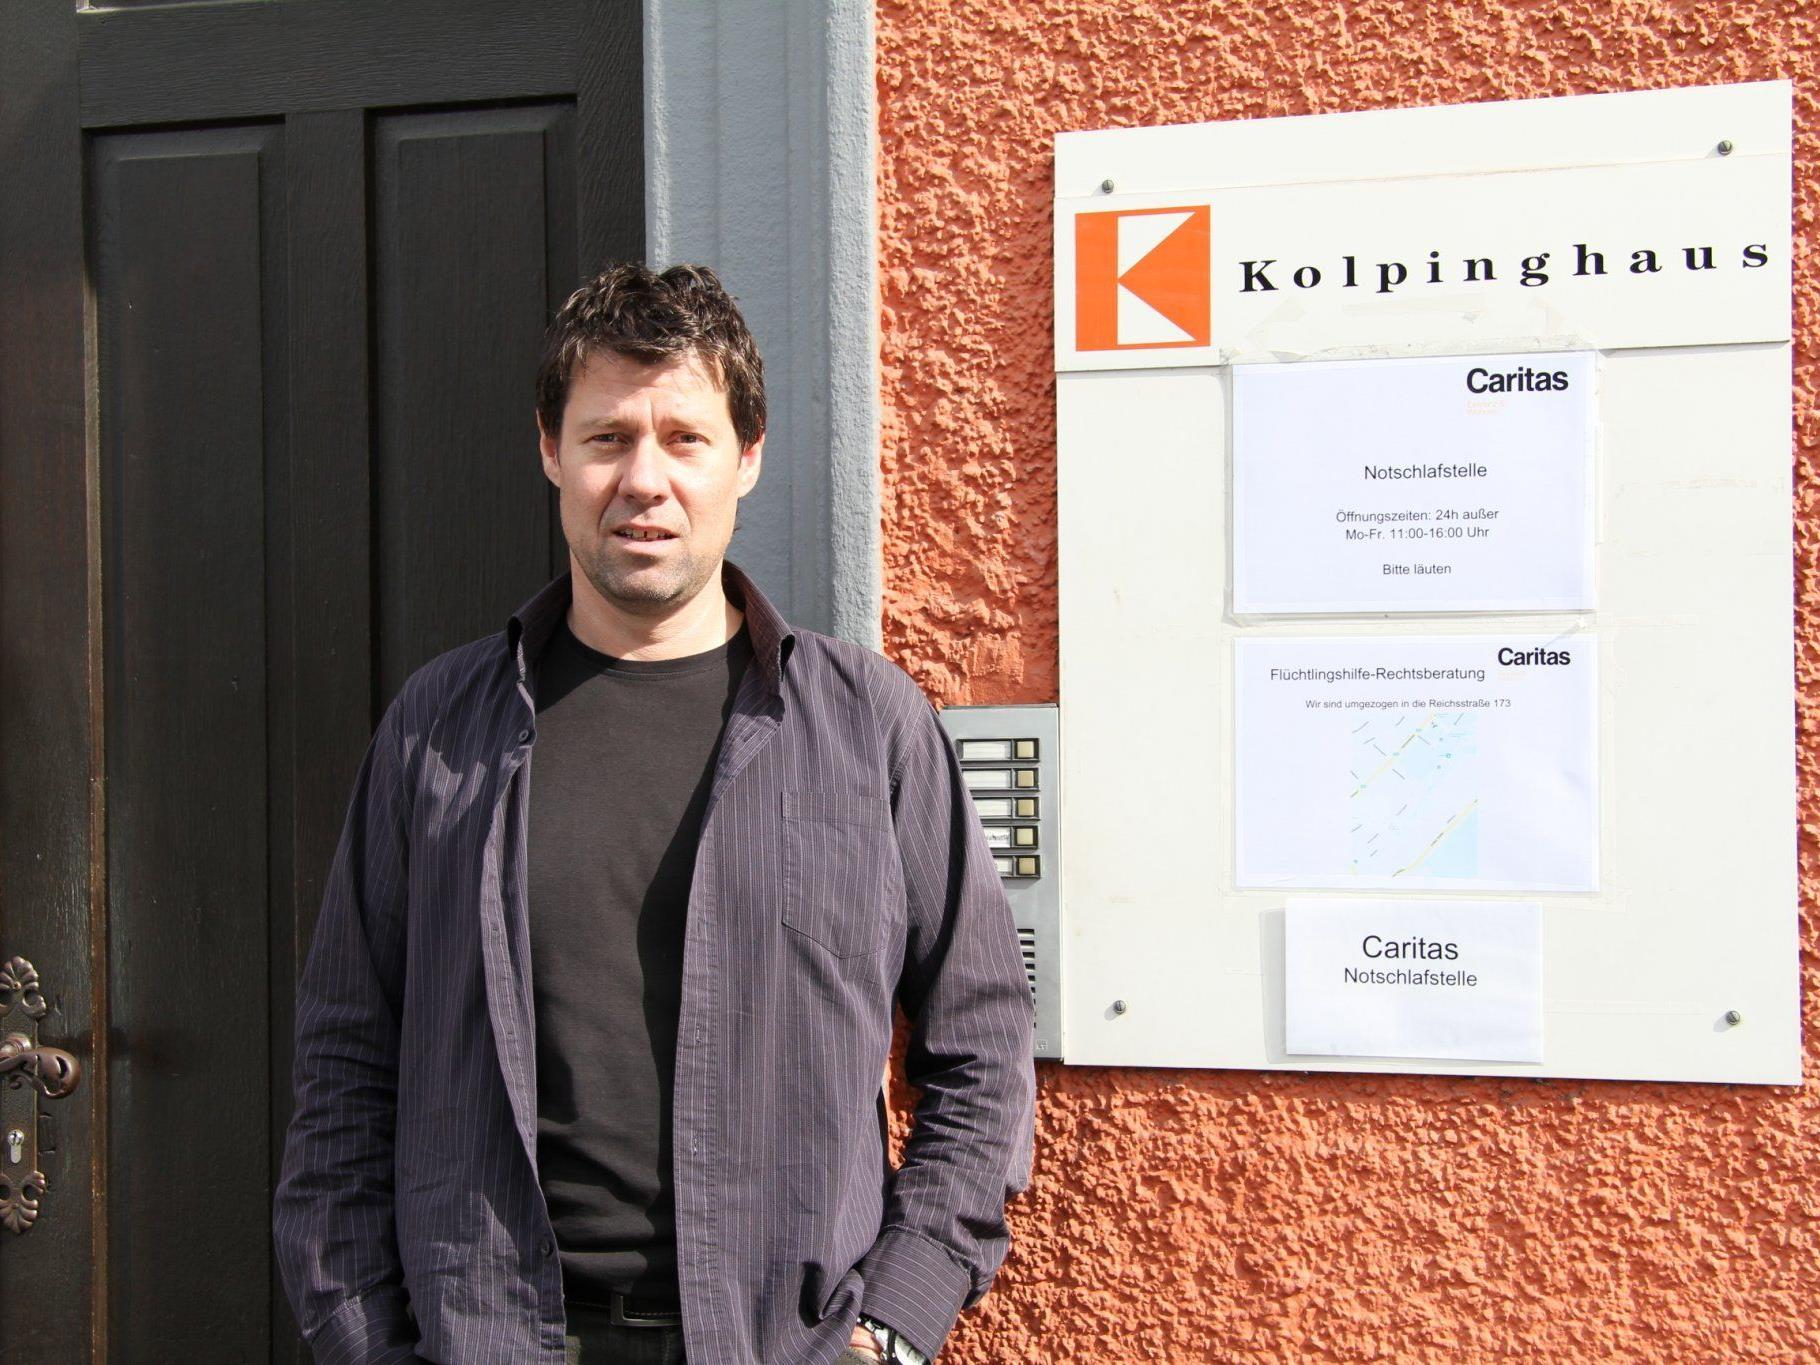 Wolfgang Meier von der Caritas vor dem Kolpinghaus.